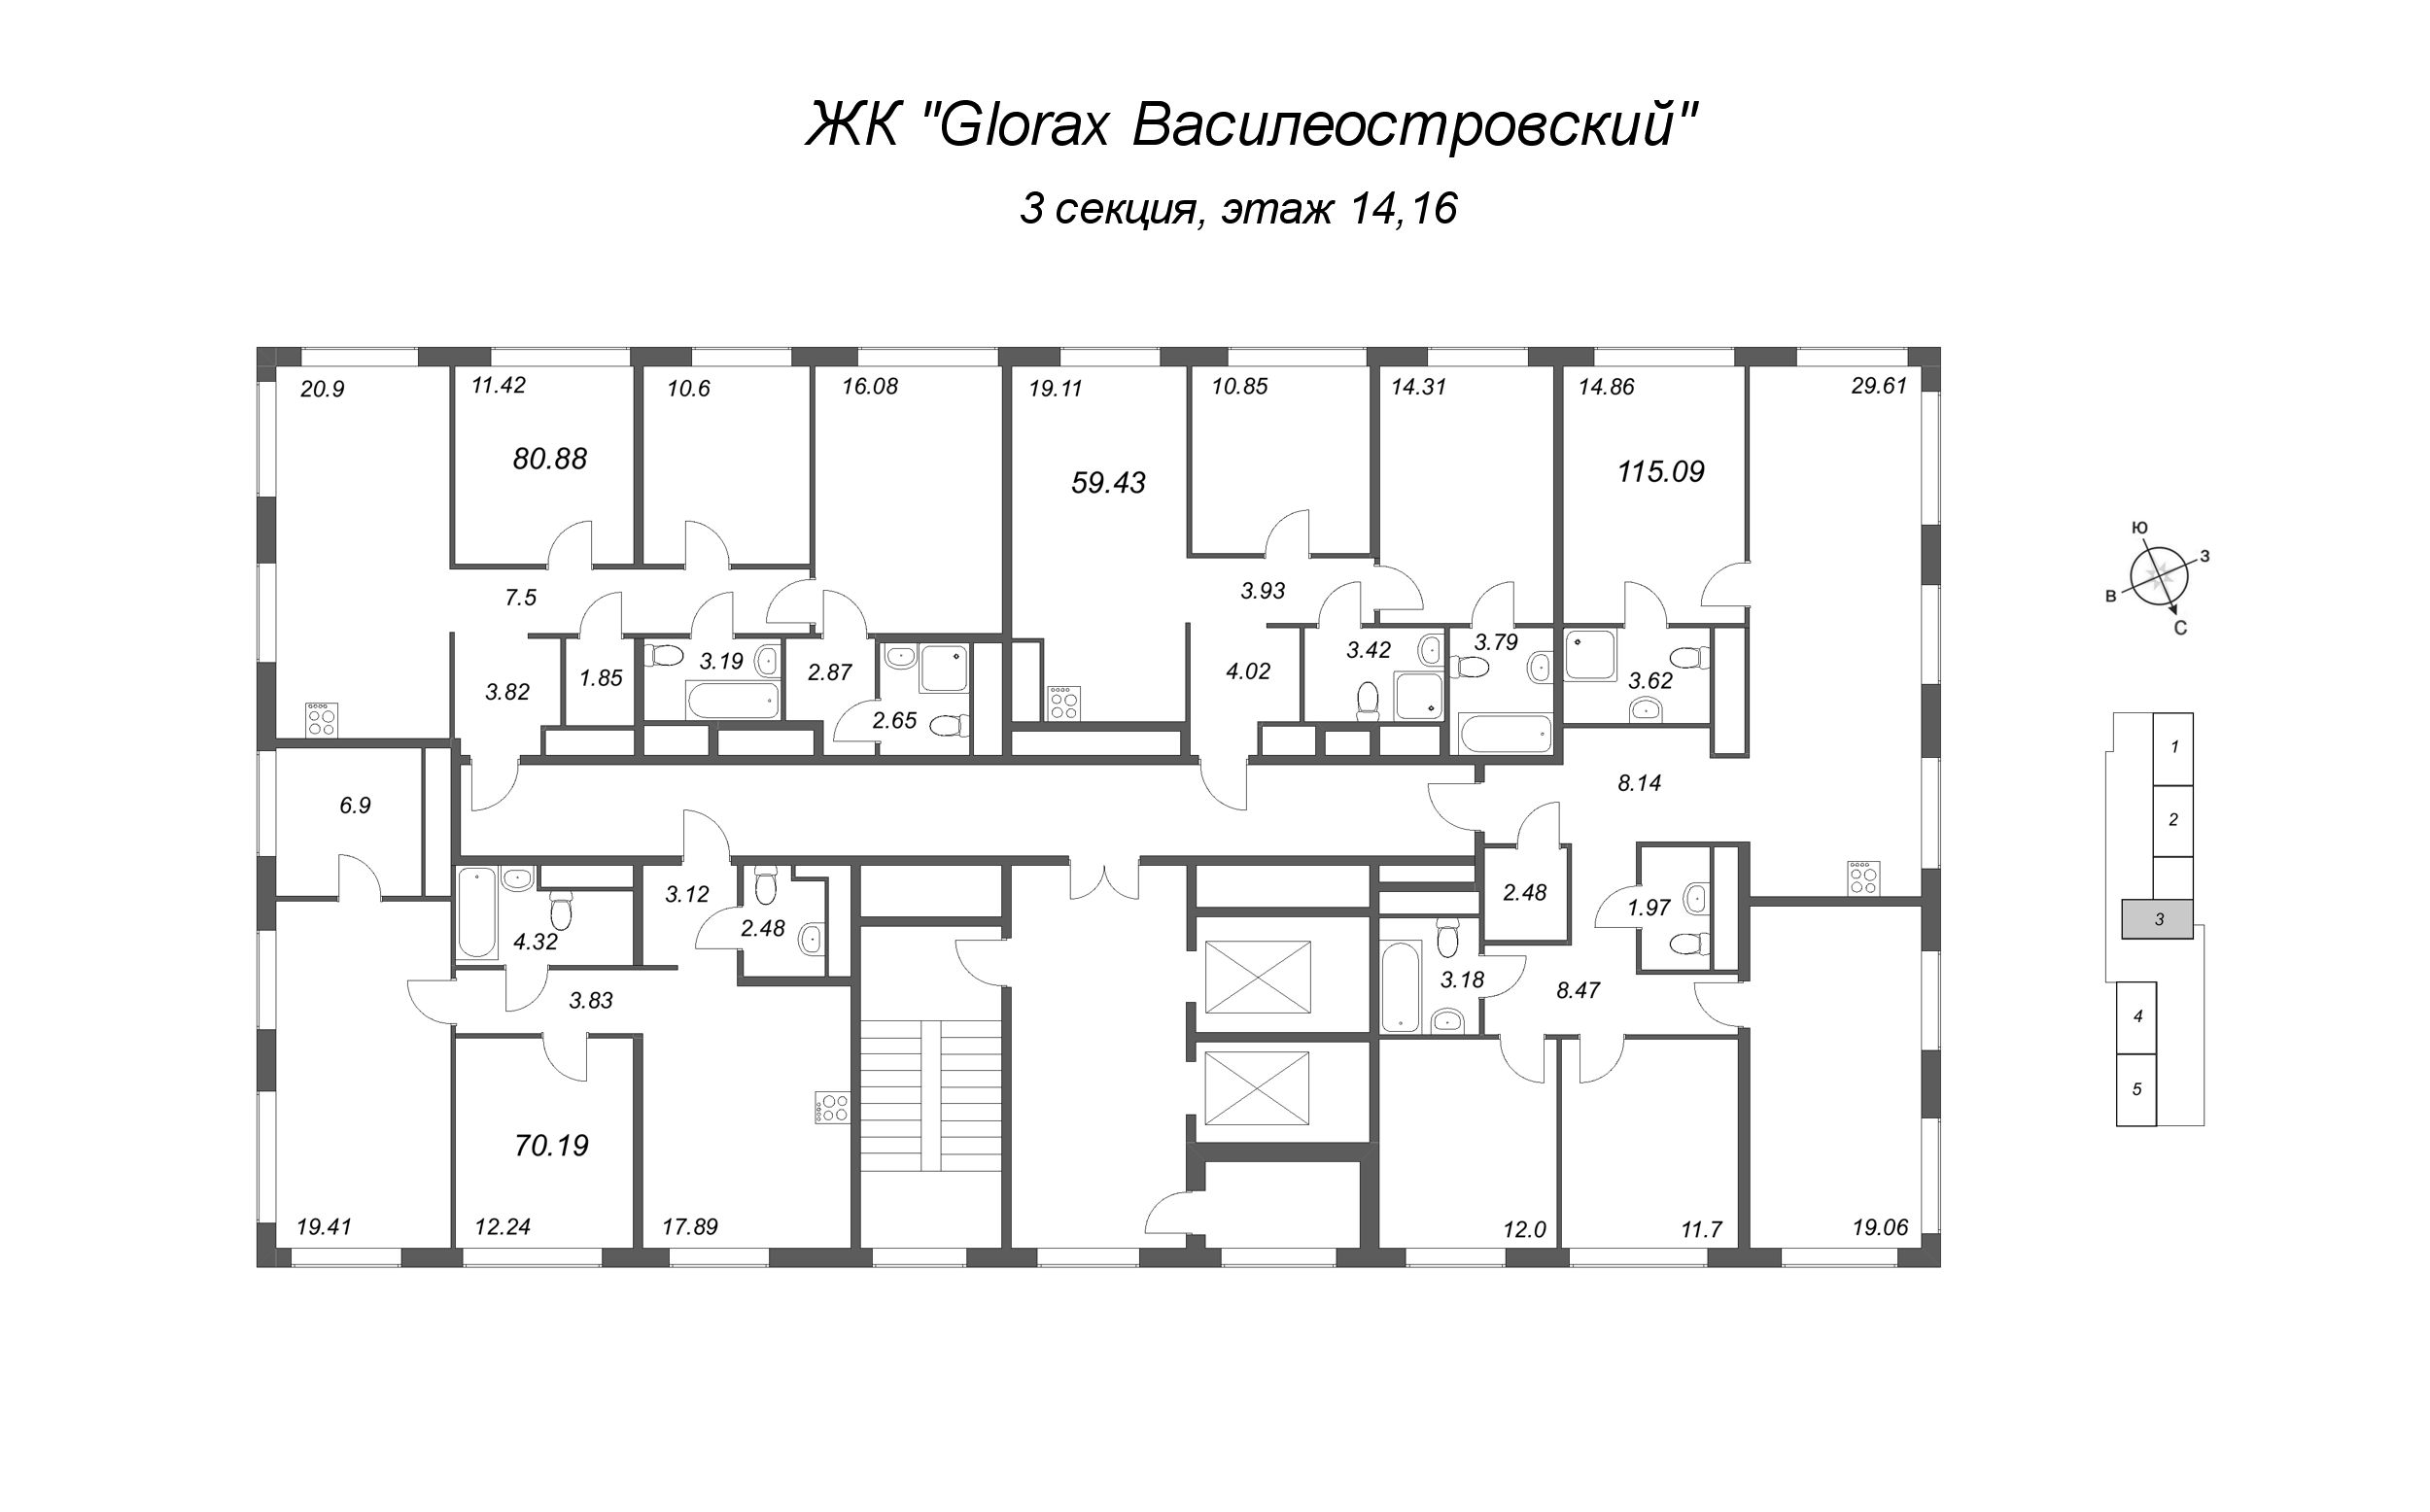 4-комнатная (Евро) квартира, 80.88 м² - планировка этажа